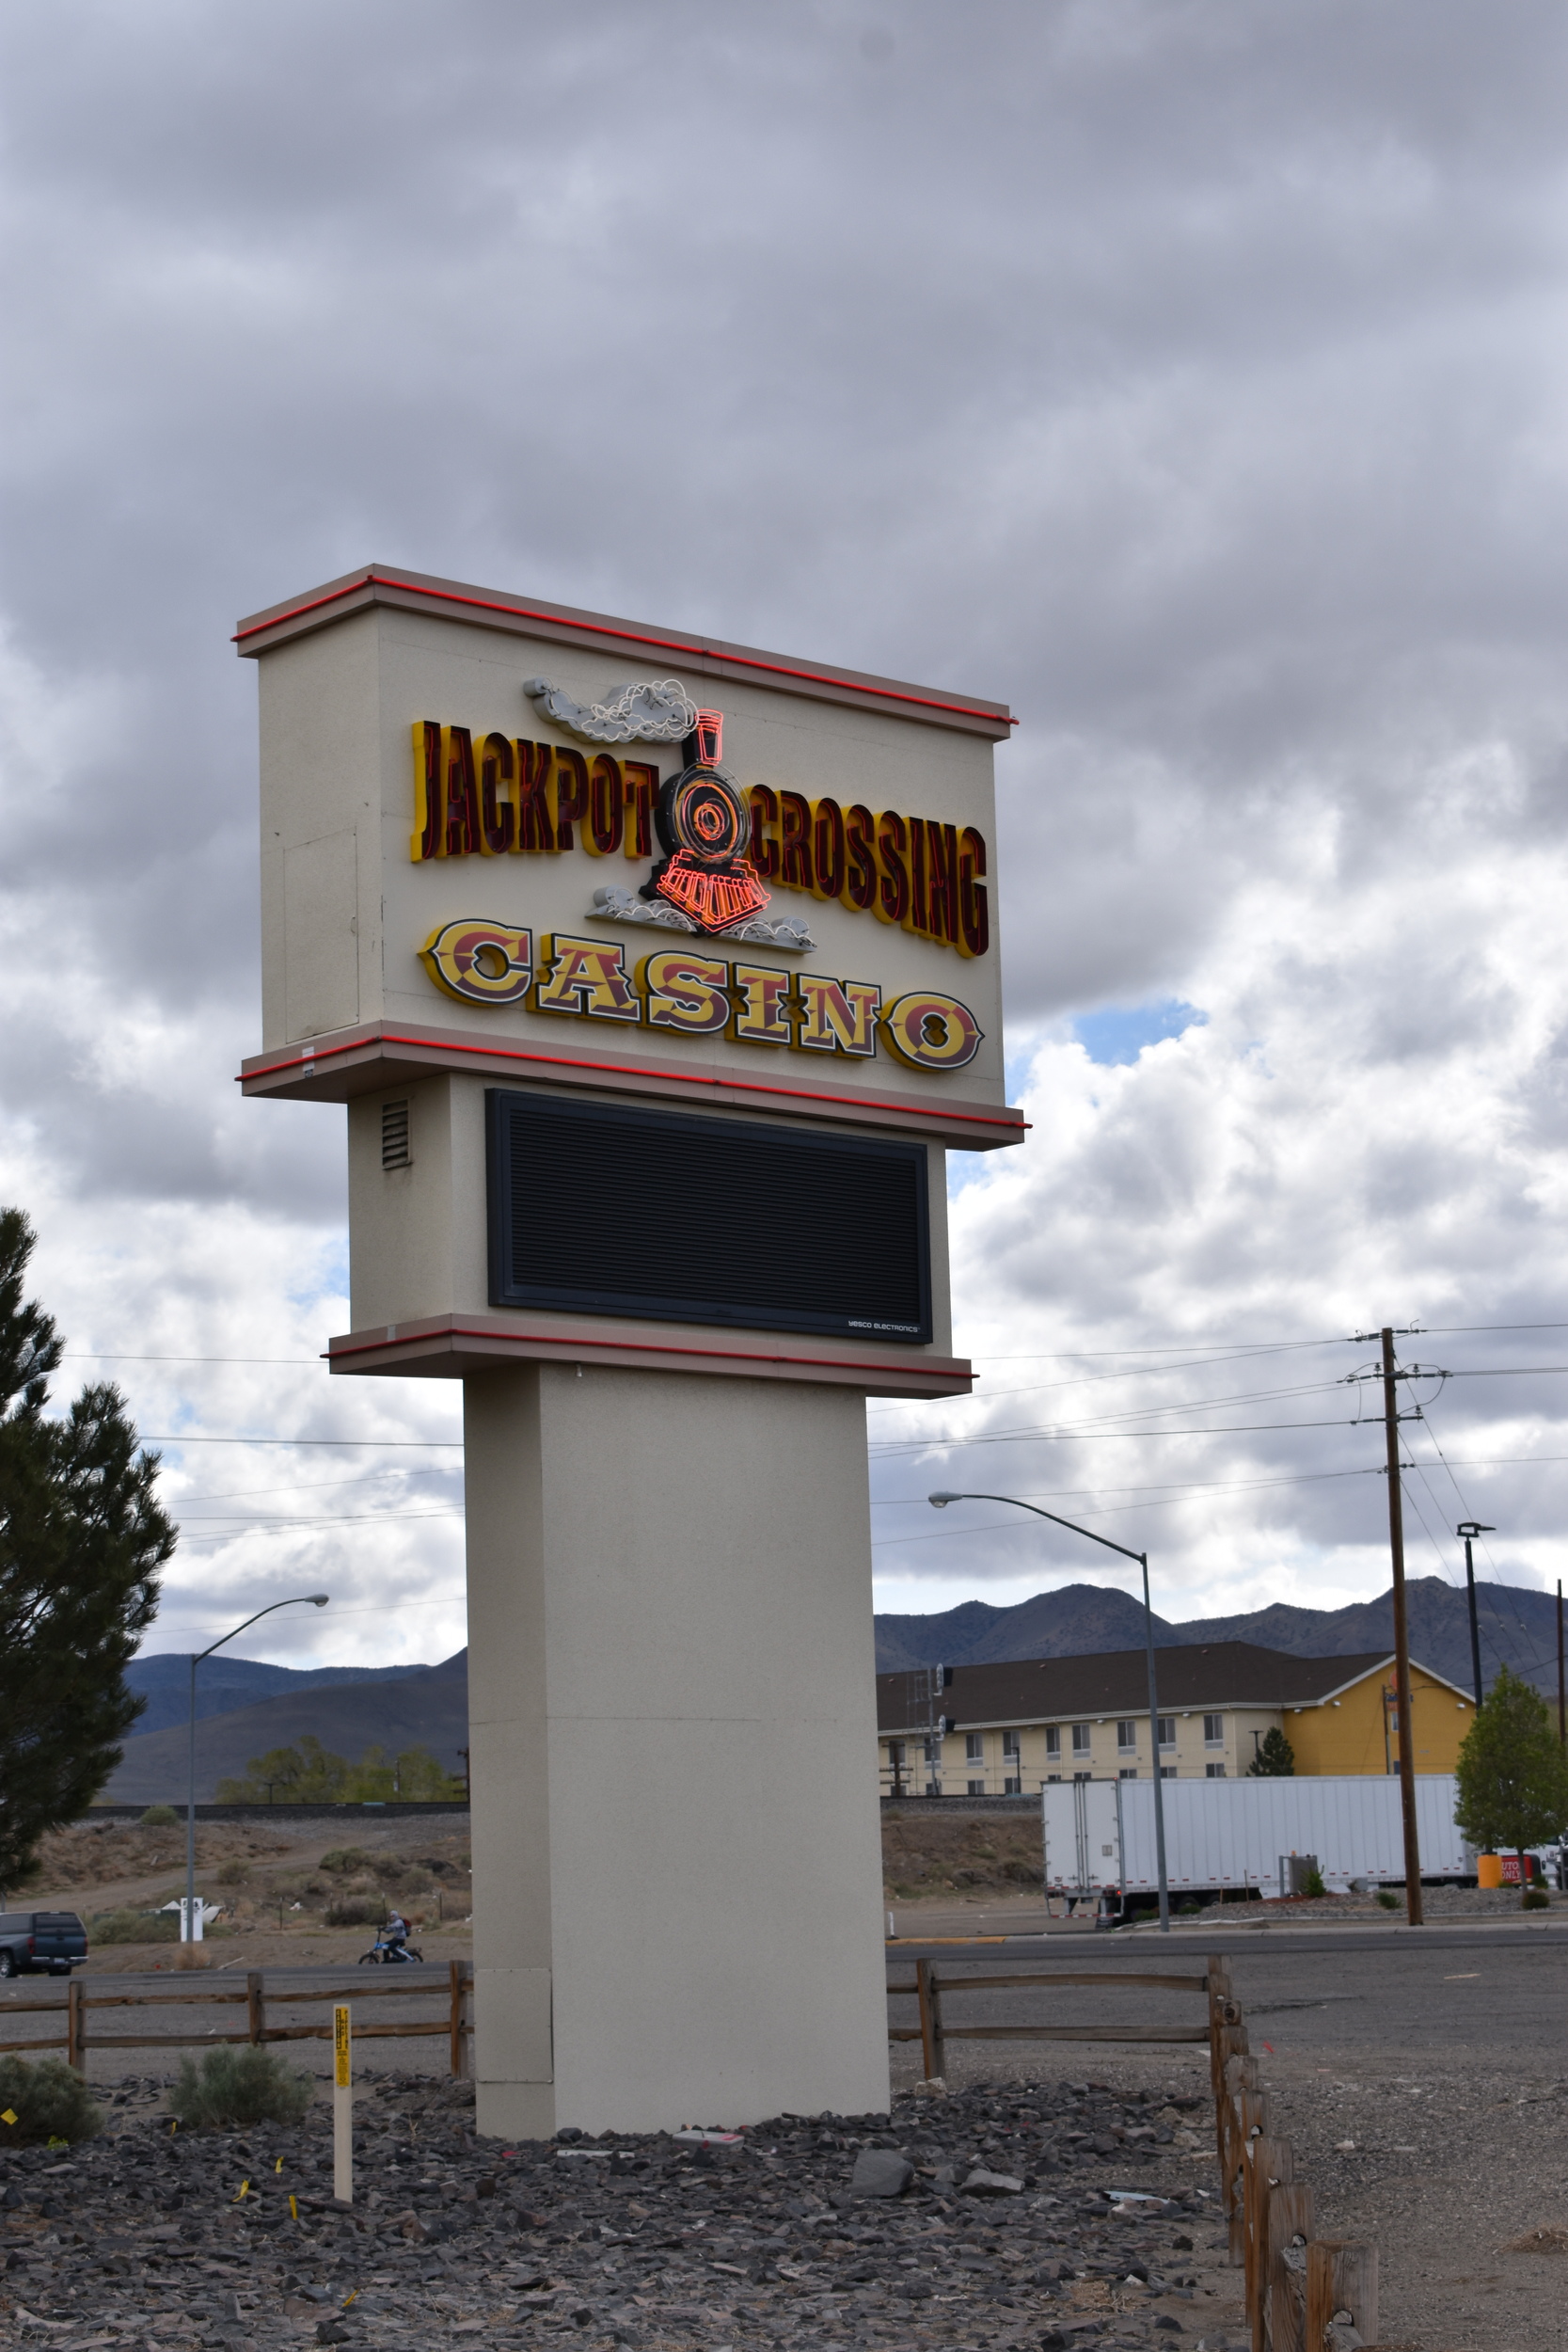 Jackpot Crossing Casino mounted sign, Fernley, Nevada